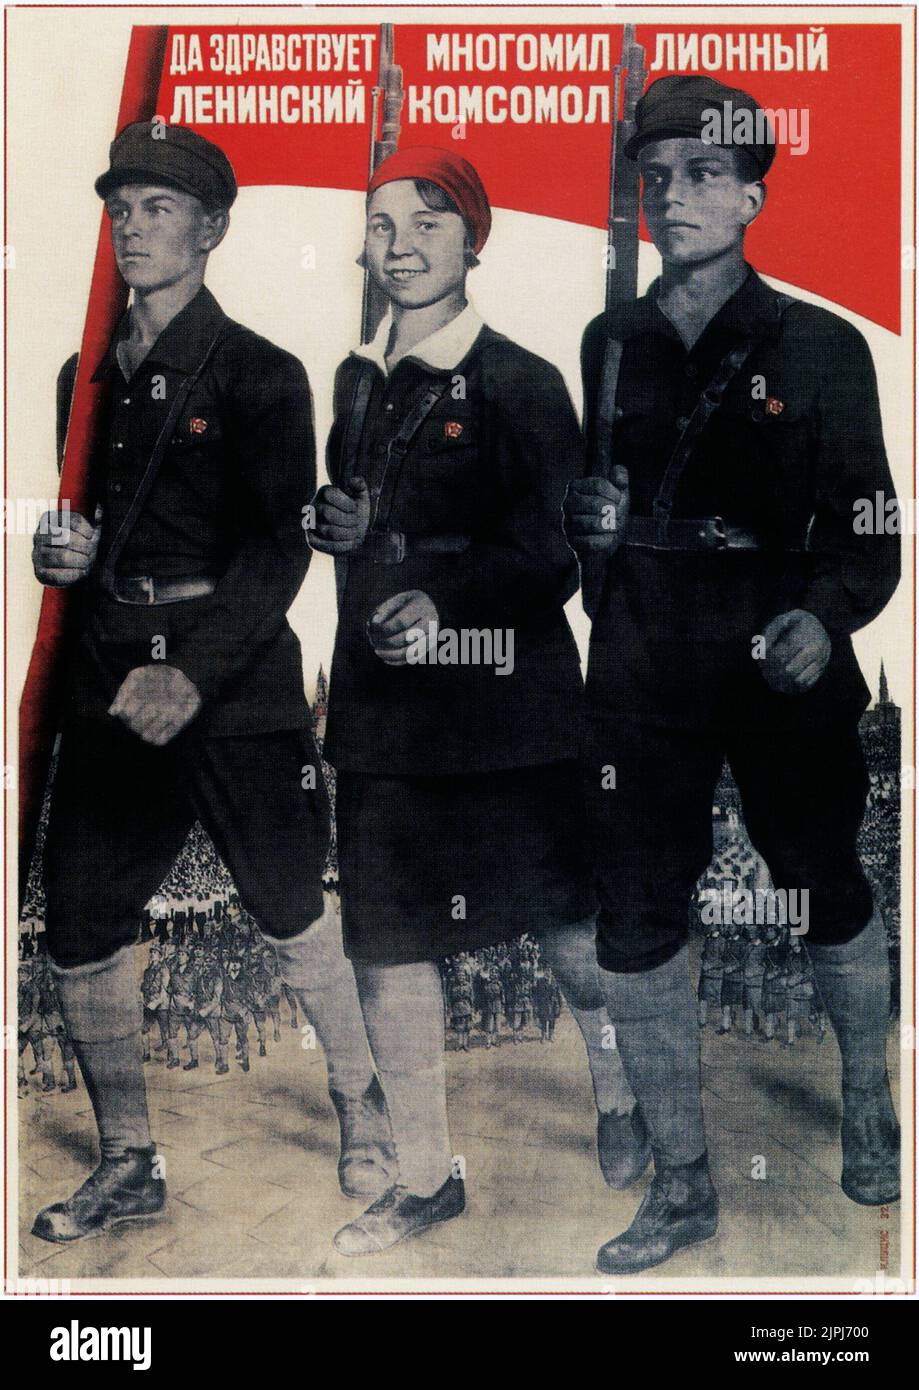 Gustavs Klucis, Да здравствует многомиллионный ленинский комсомол - Long live the multi-million Leninist Komsomol. Vintage Russian poster 1932. Stock Photo